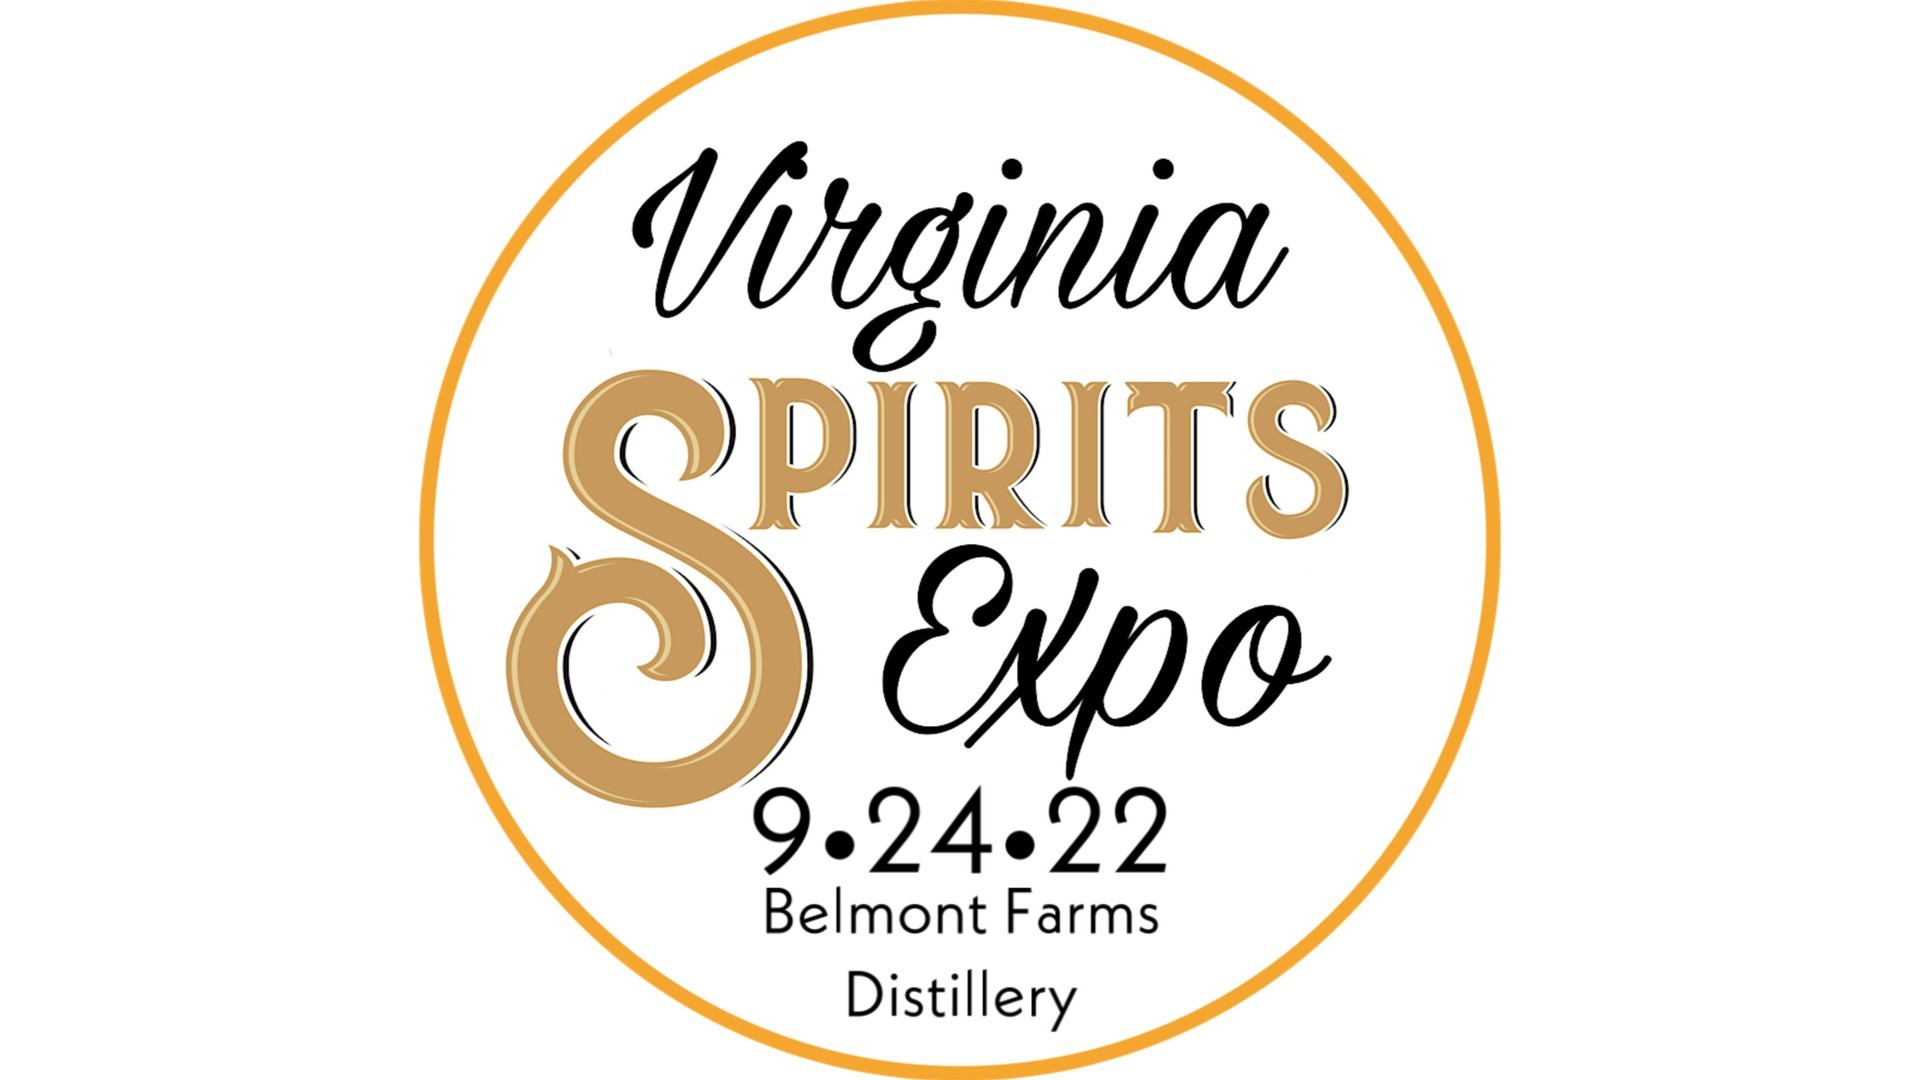 Virginia Spirits Expo, Culpeper, Virginia, United States